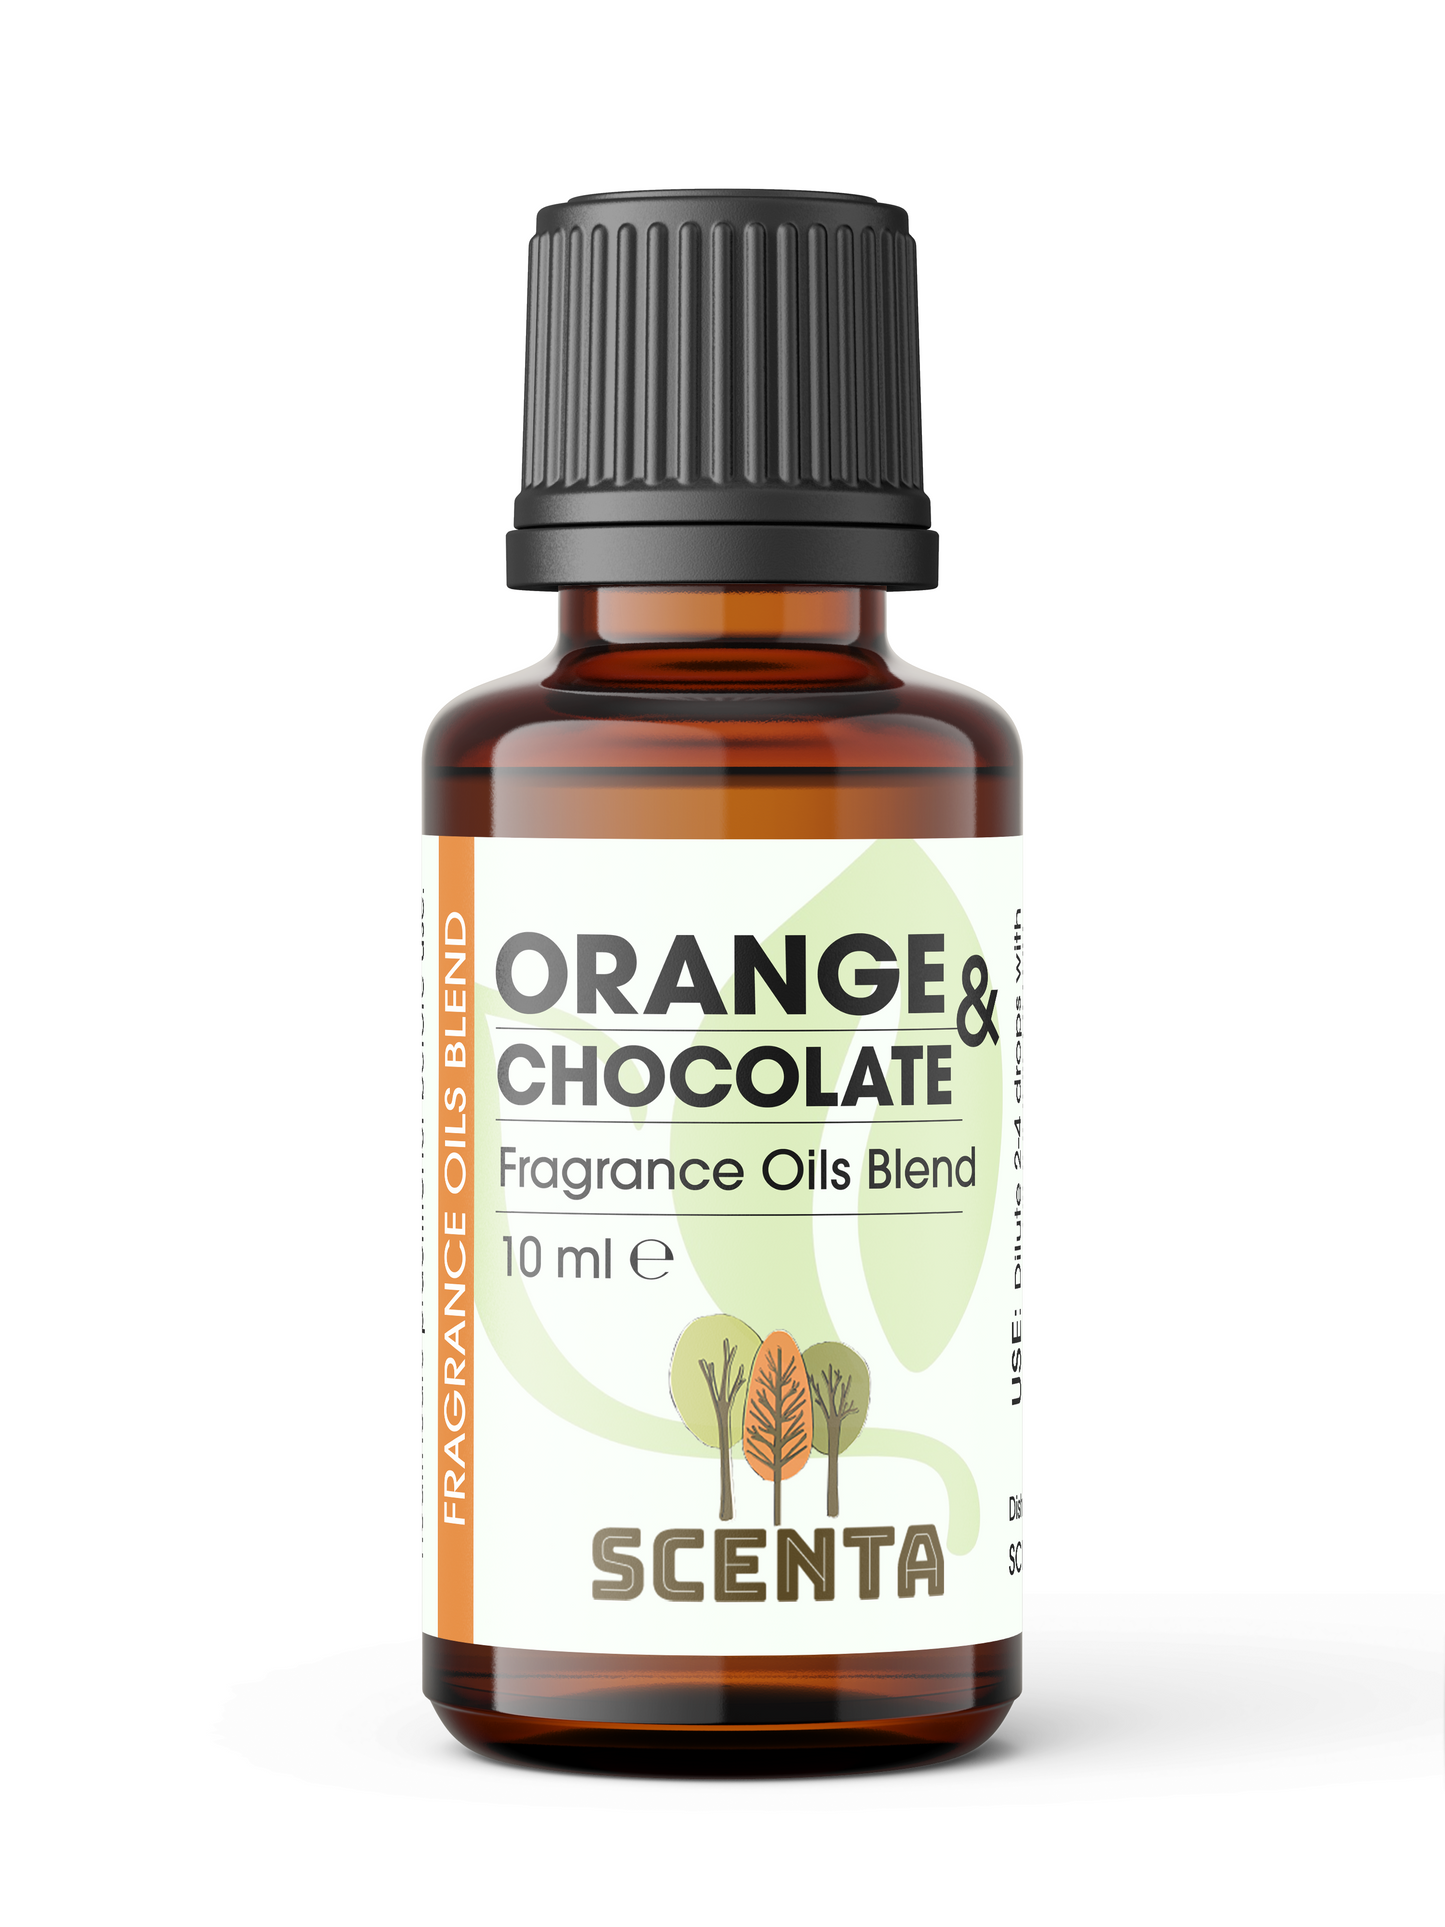 chocolate orange fragrance oils blend